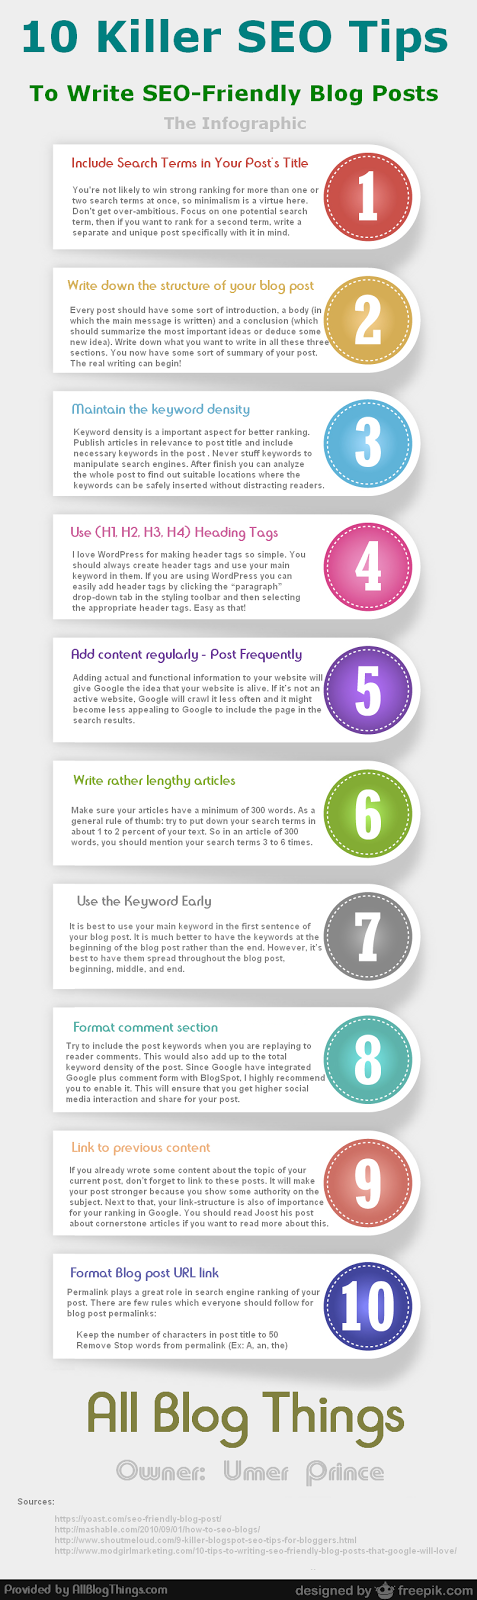 Infographic: 10 Killer SEO Tips To Write SEO-Friendly Blog Posts